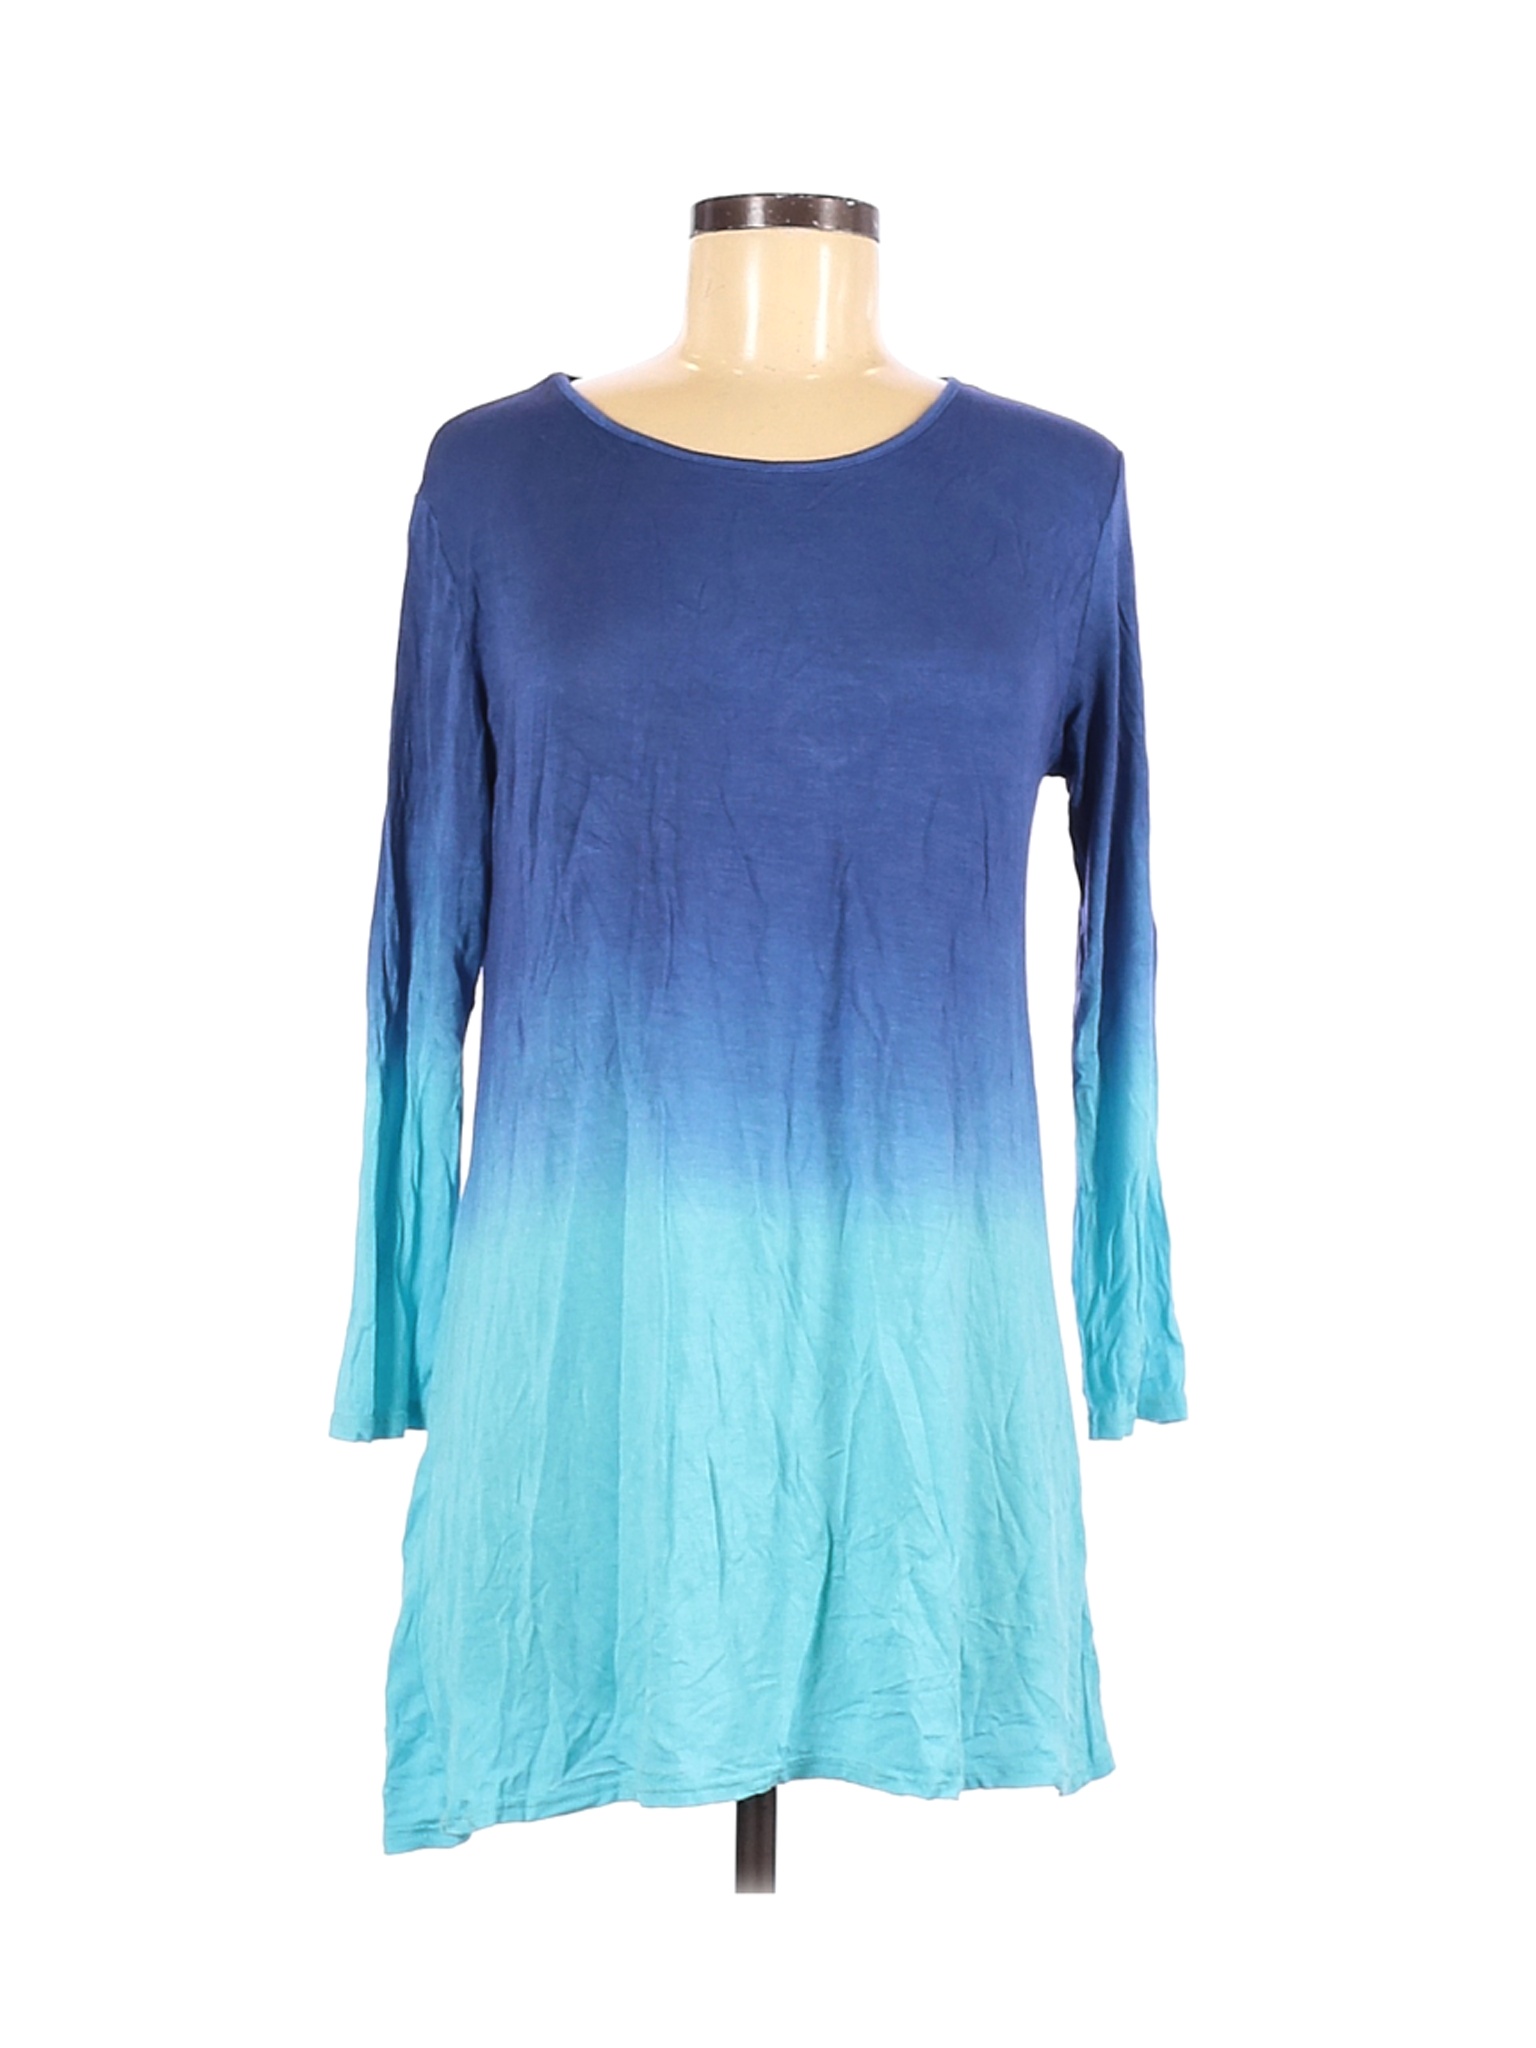 Unbranded Women Blue 3/4 Sleeve Top M | eBay